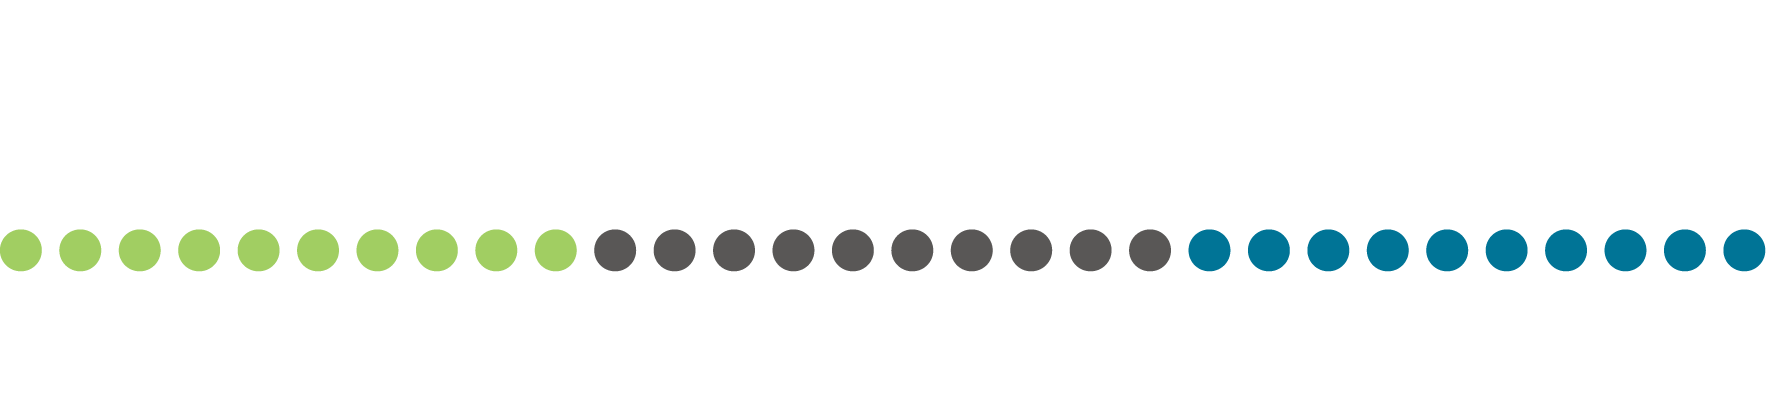 Asinta 30 Years - 1992-2022